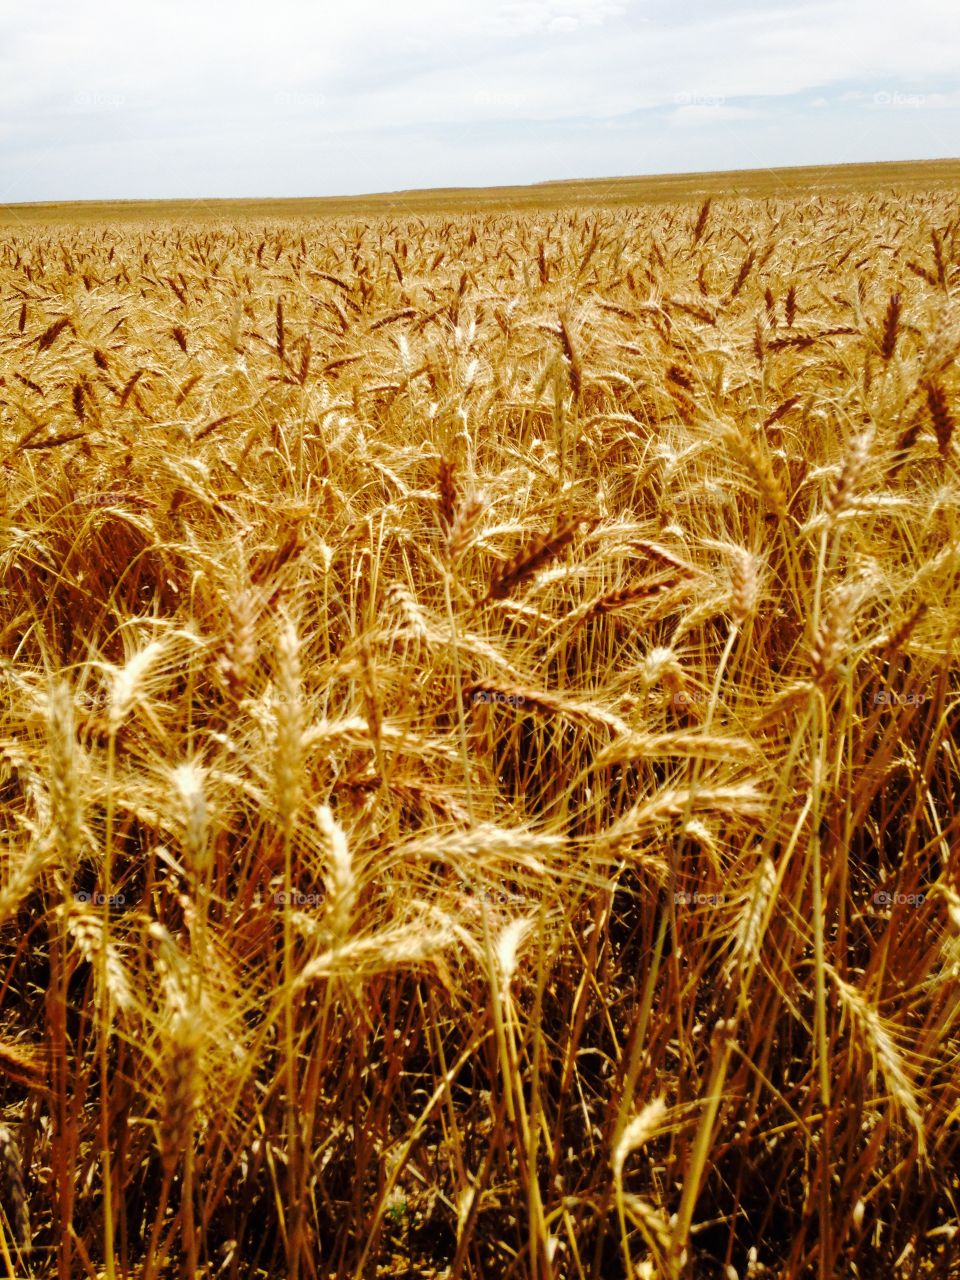 HarvestRipe Wheat